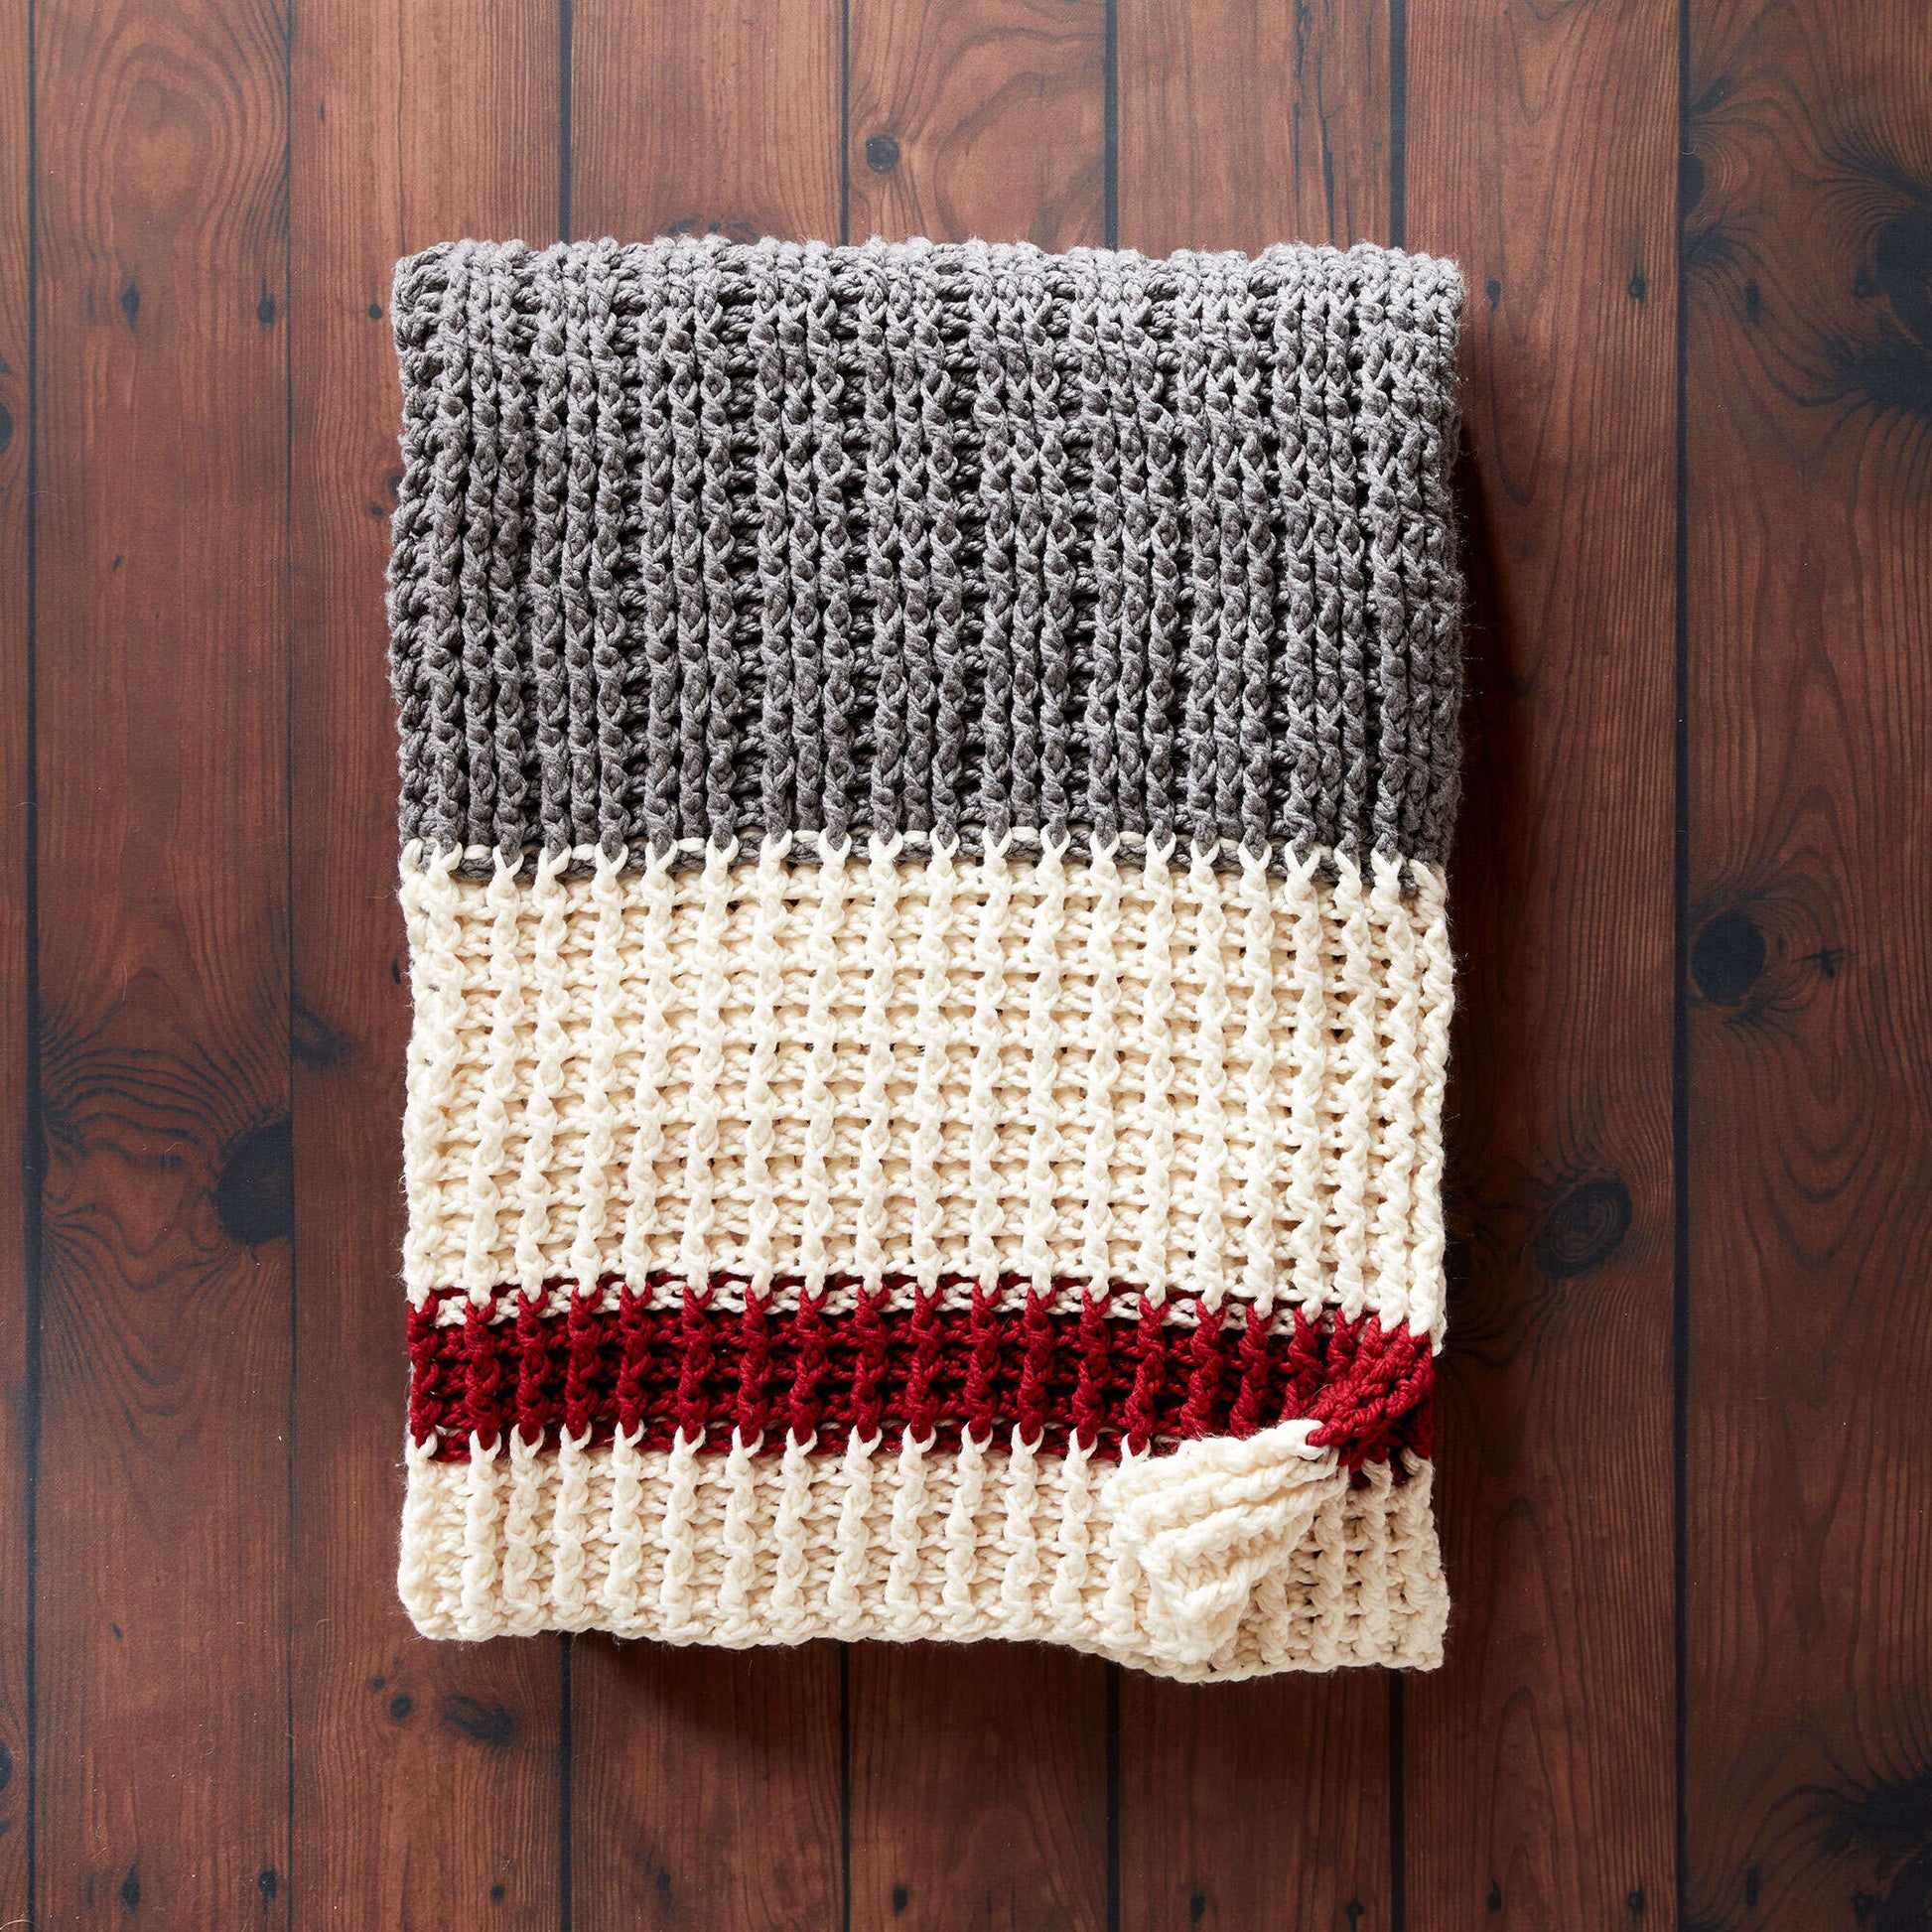 Bernat Lumberjack Crochet Throw Crochet Blanket made in Bernat Softee Chunky yarn